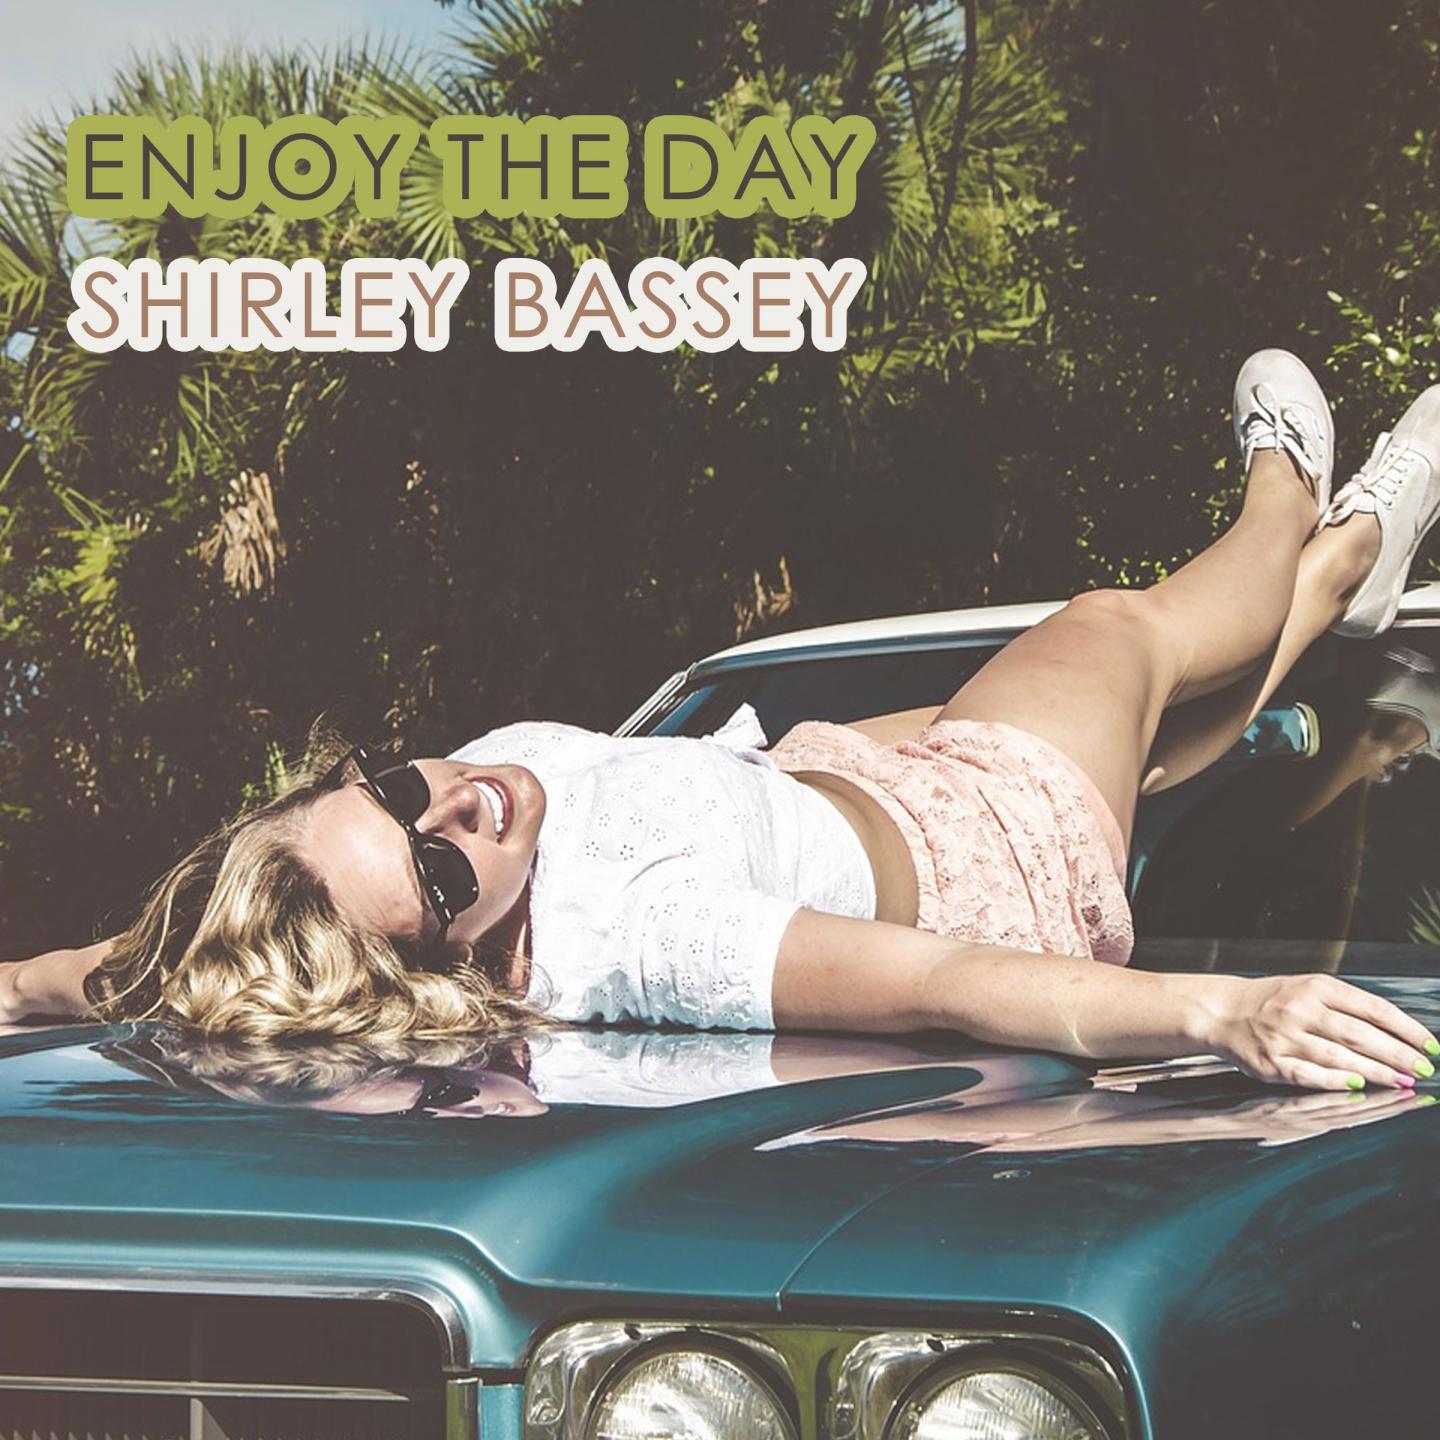 Shirley Bassey - Fire Down Below